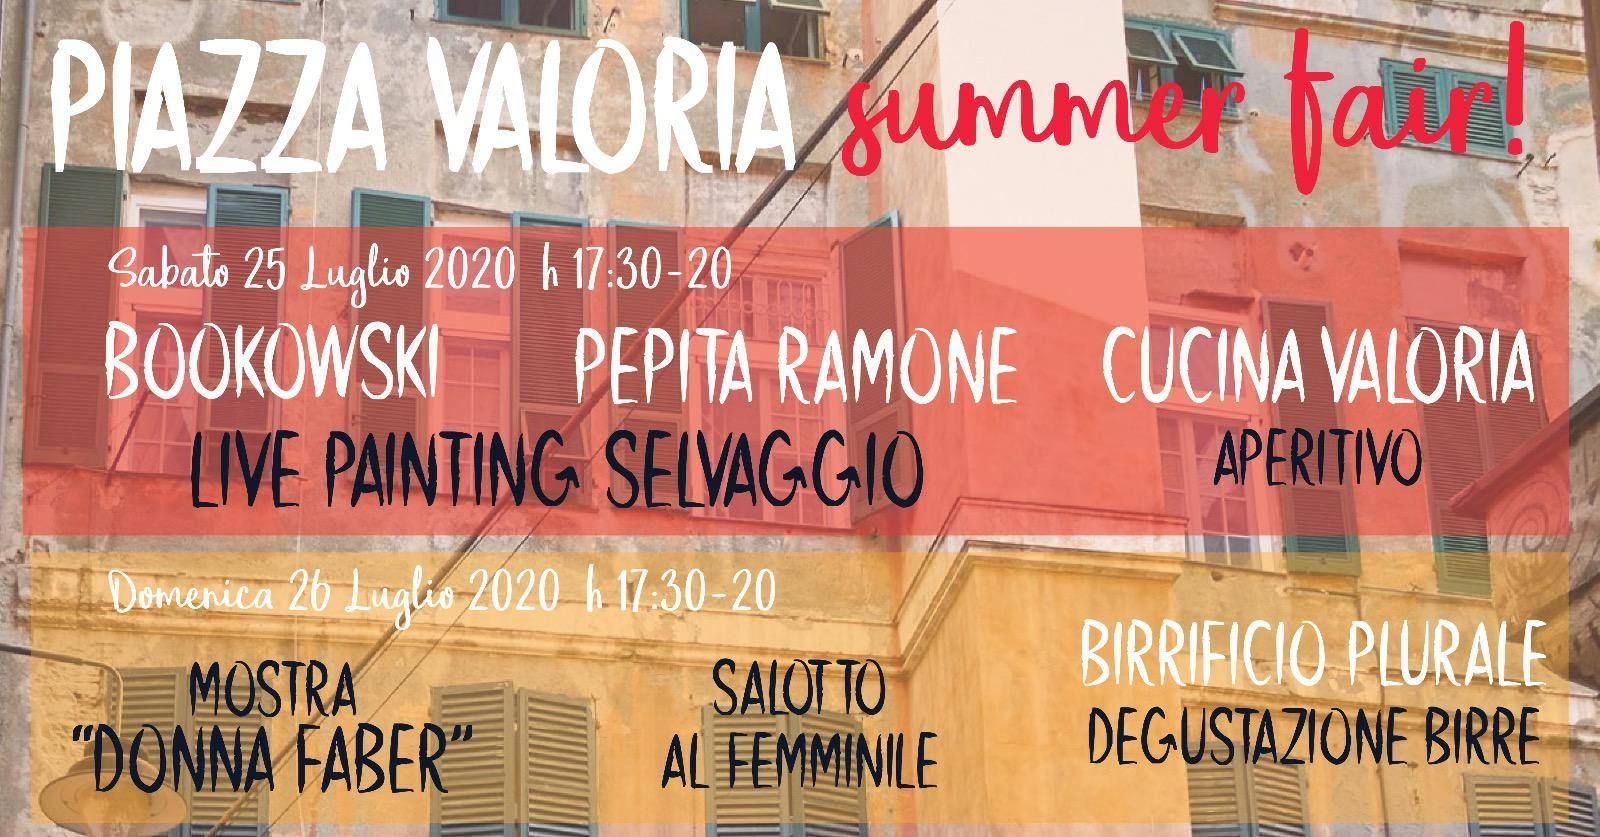 Piazza Valoria - Summer Fair!